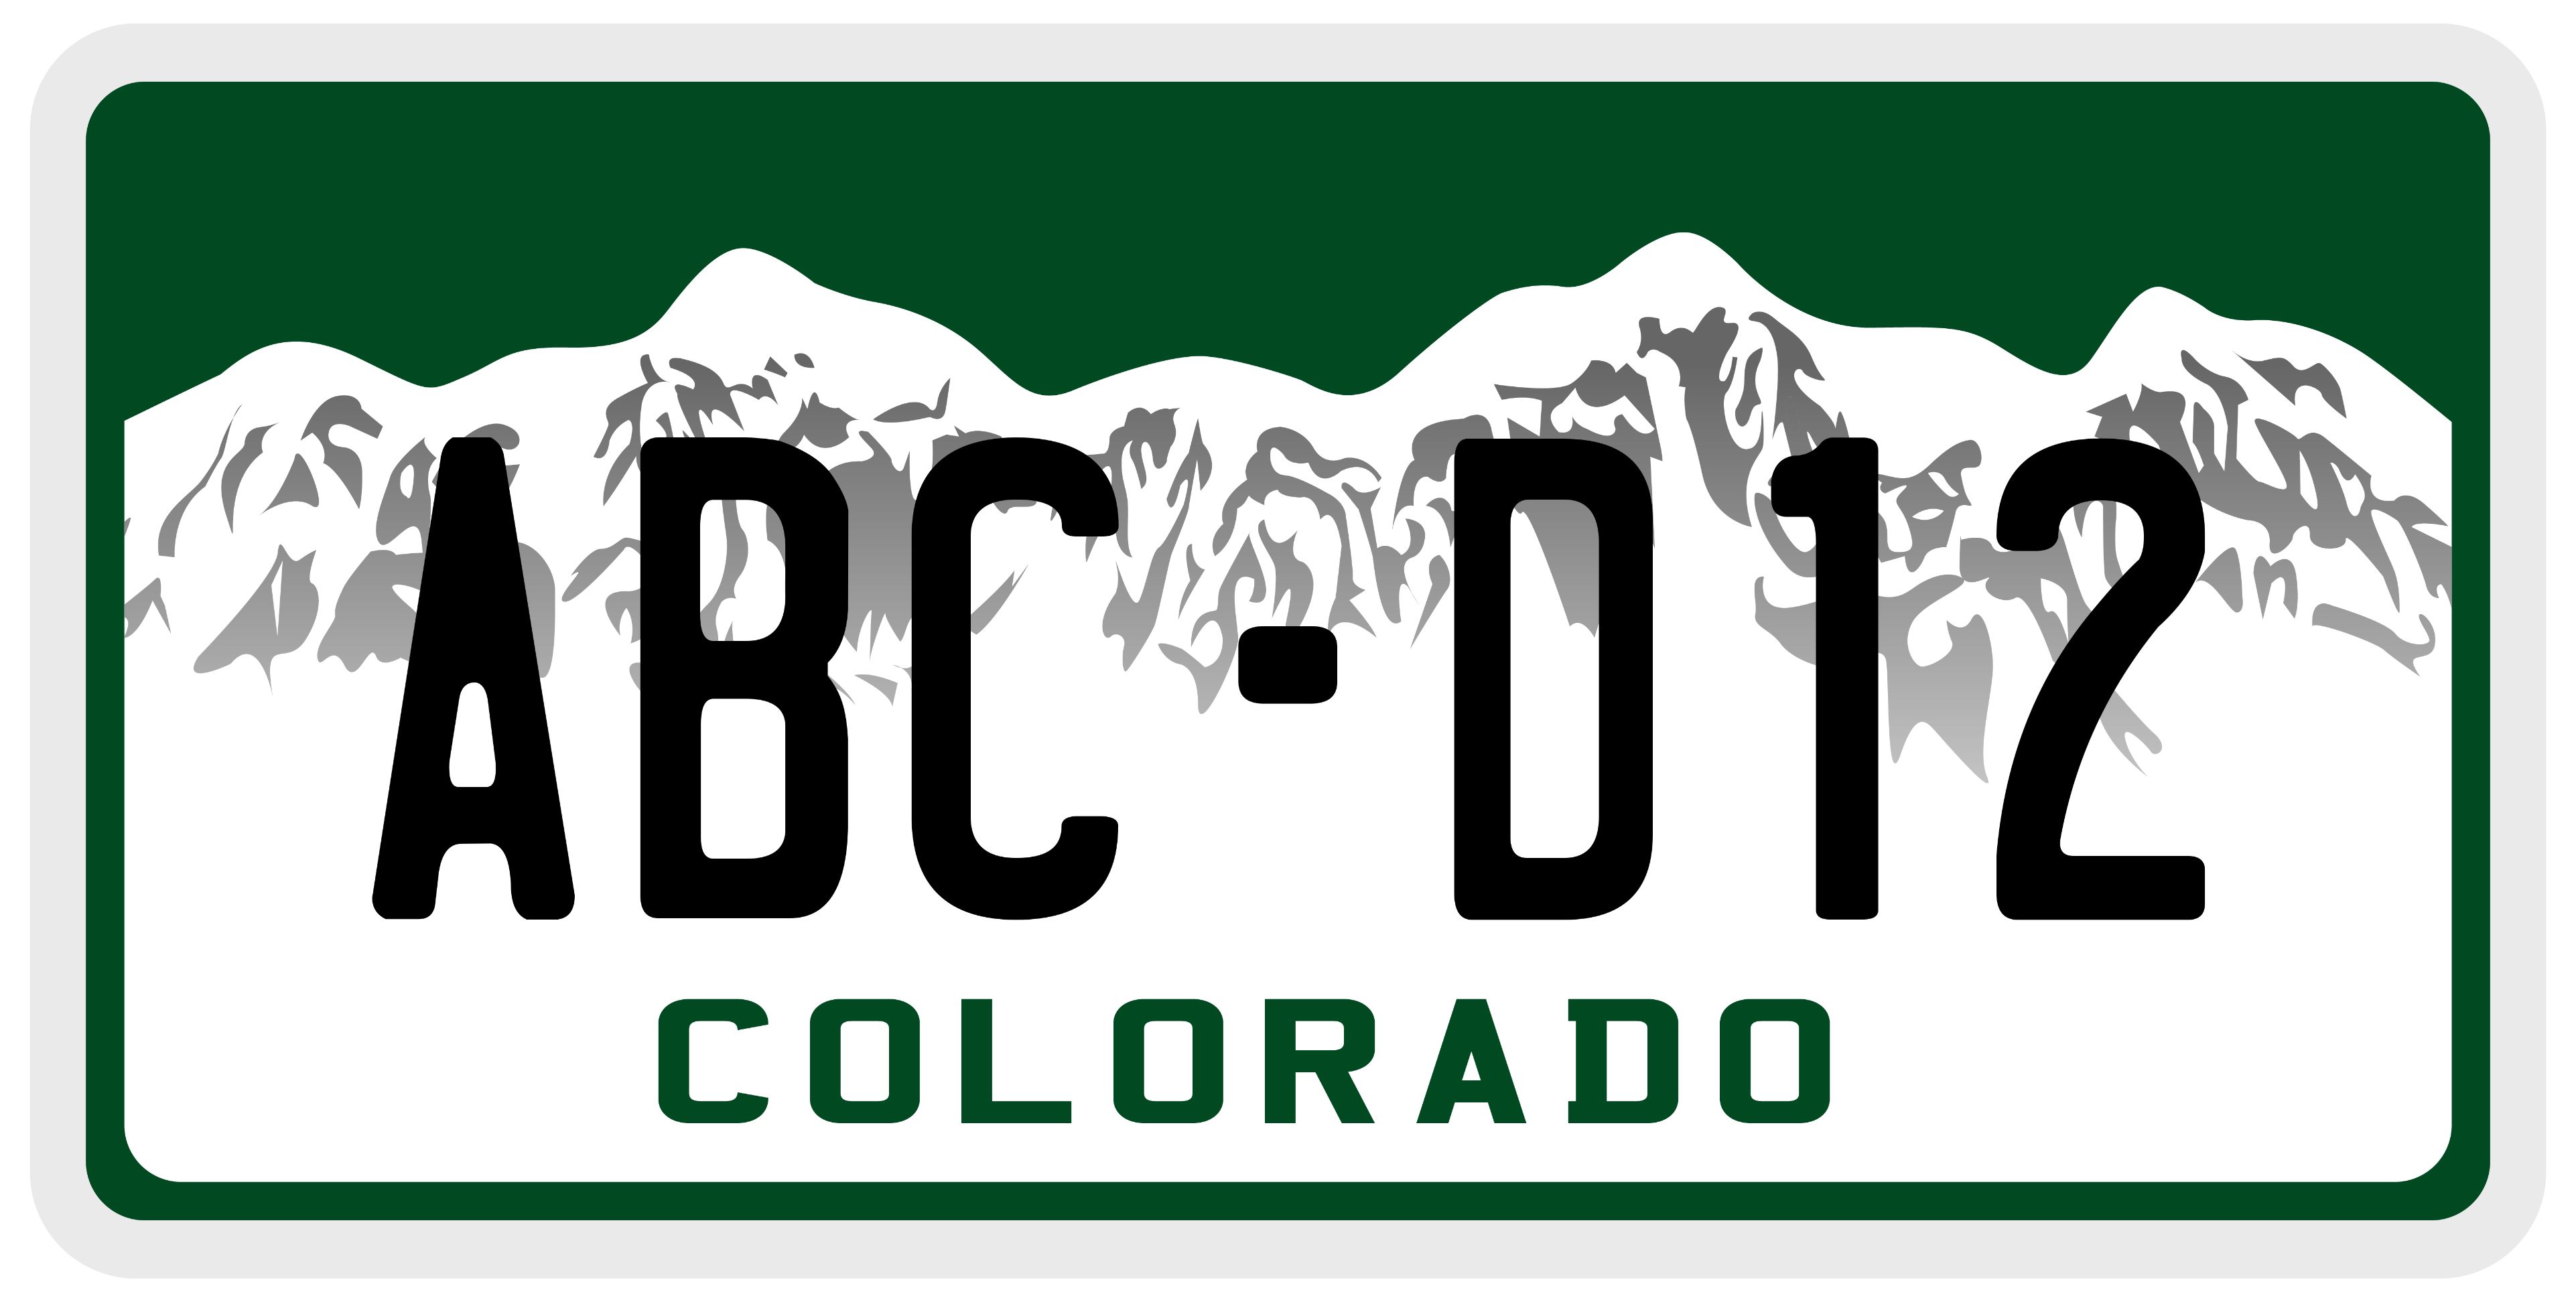 Colorado license plate sample